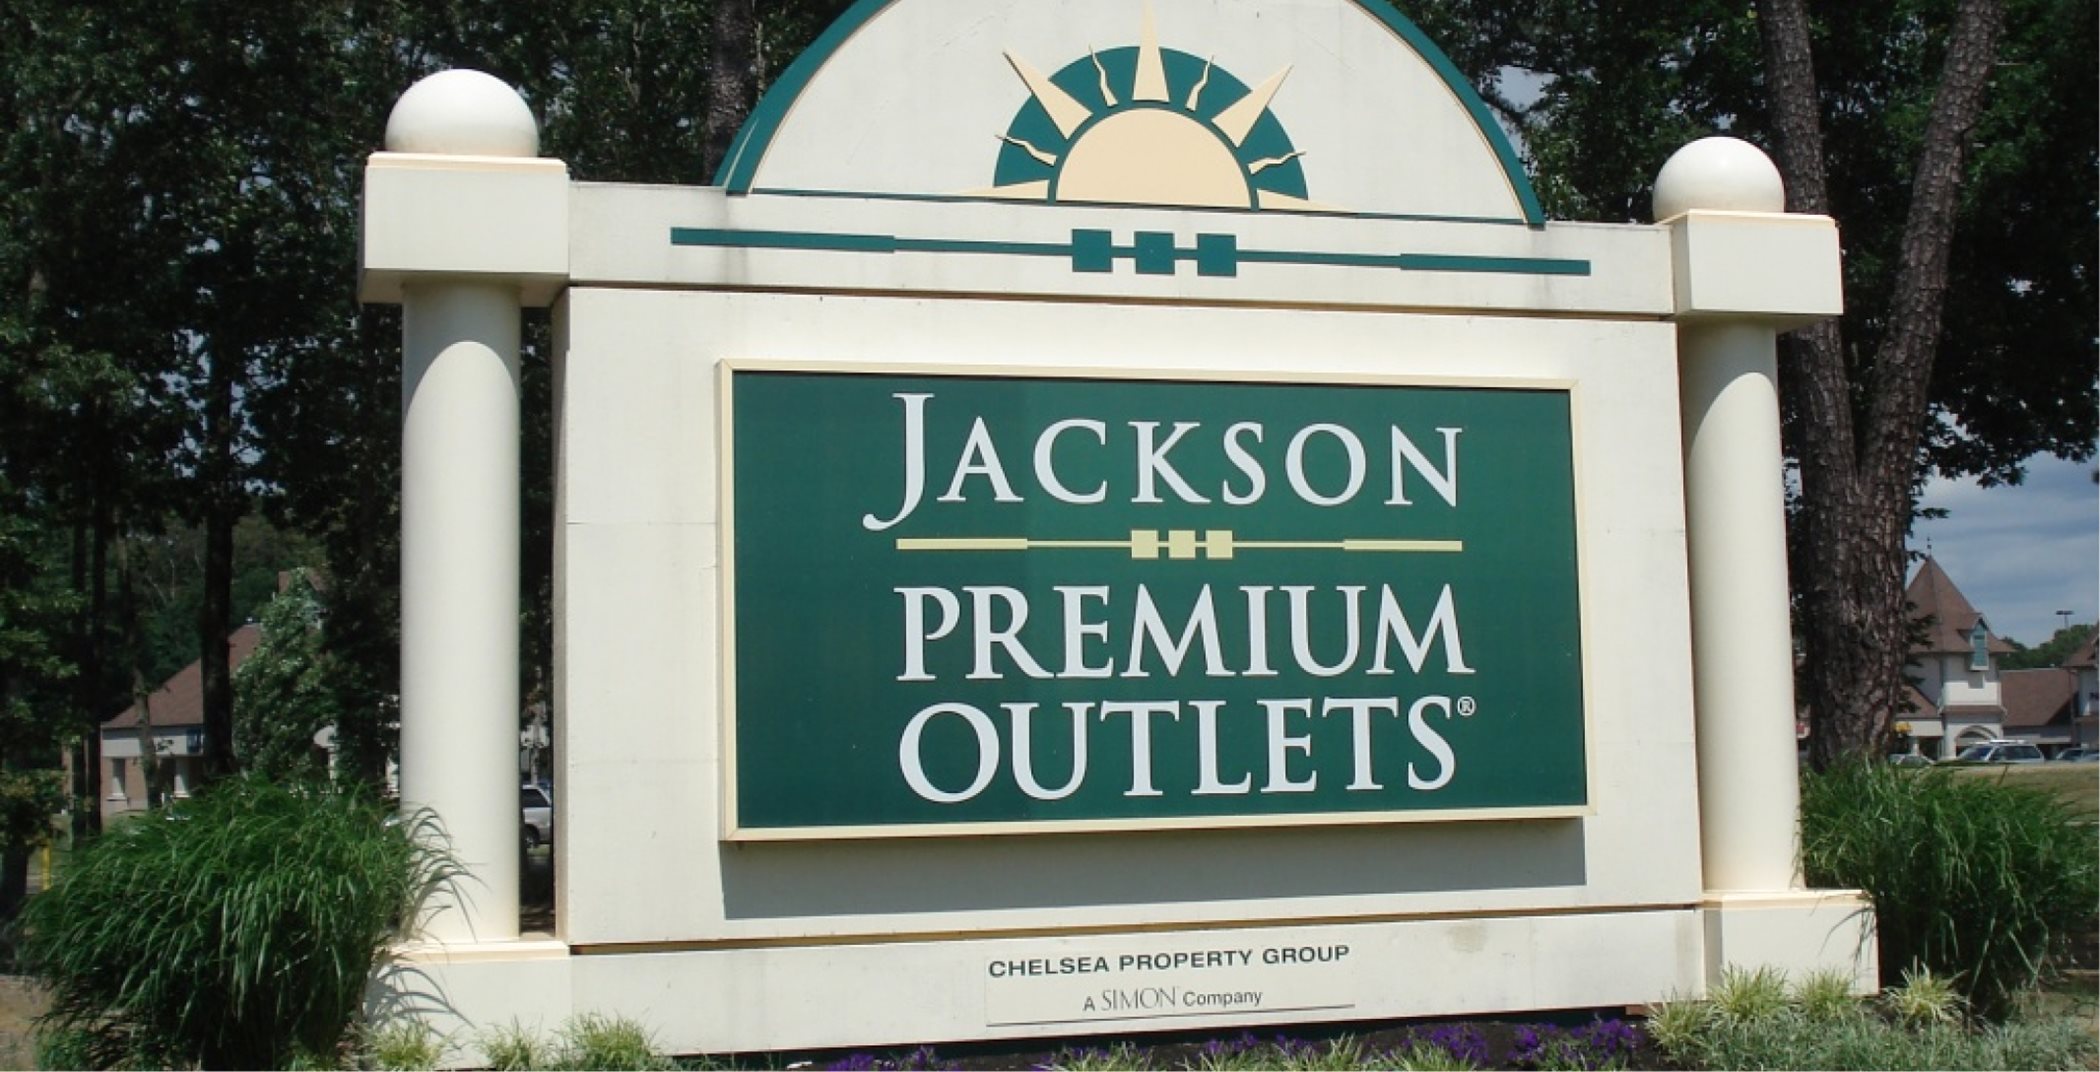 Jackson Outlets